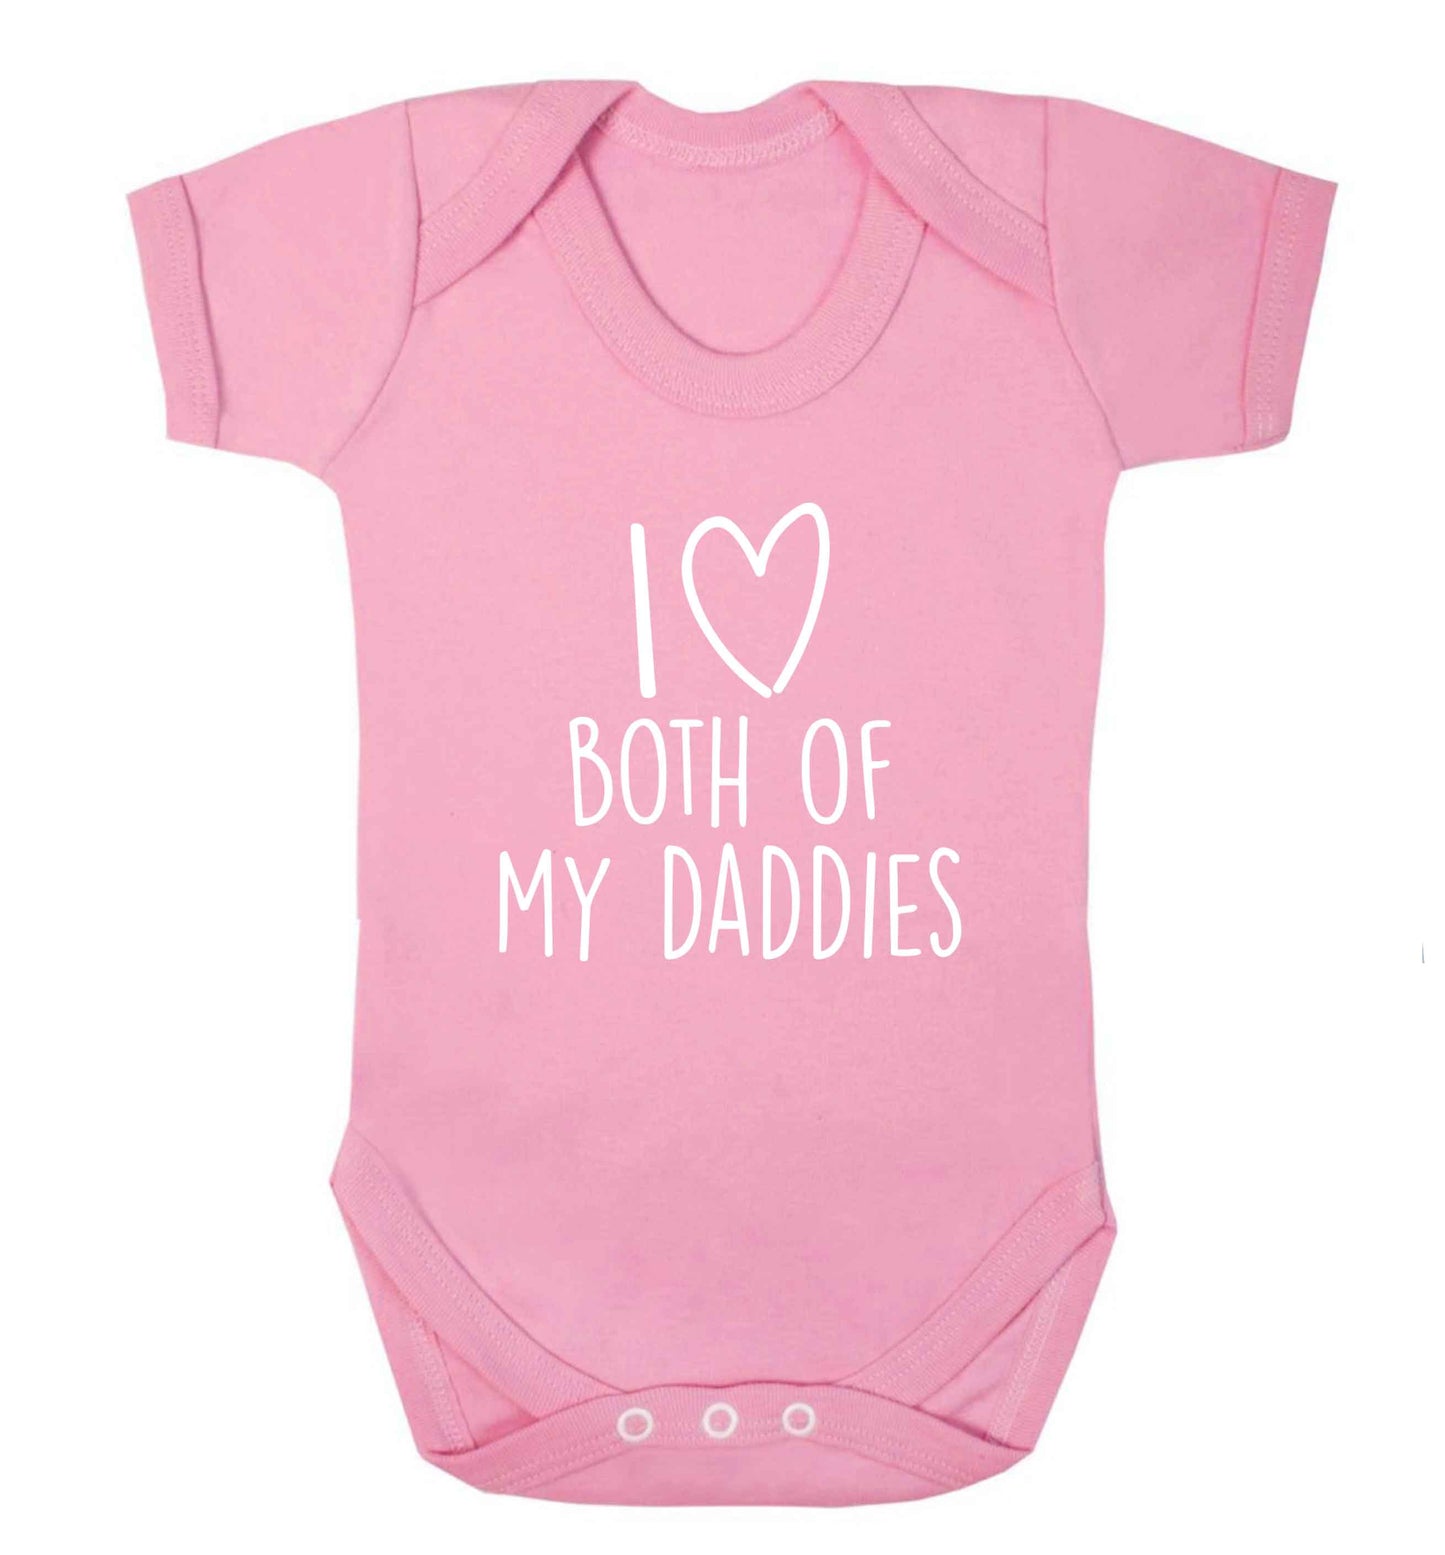 I love both of my daddies baby vest pale pink 18-24 months